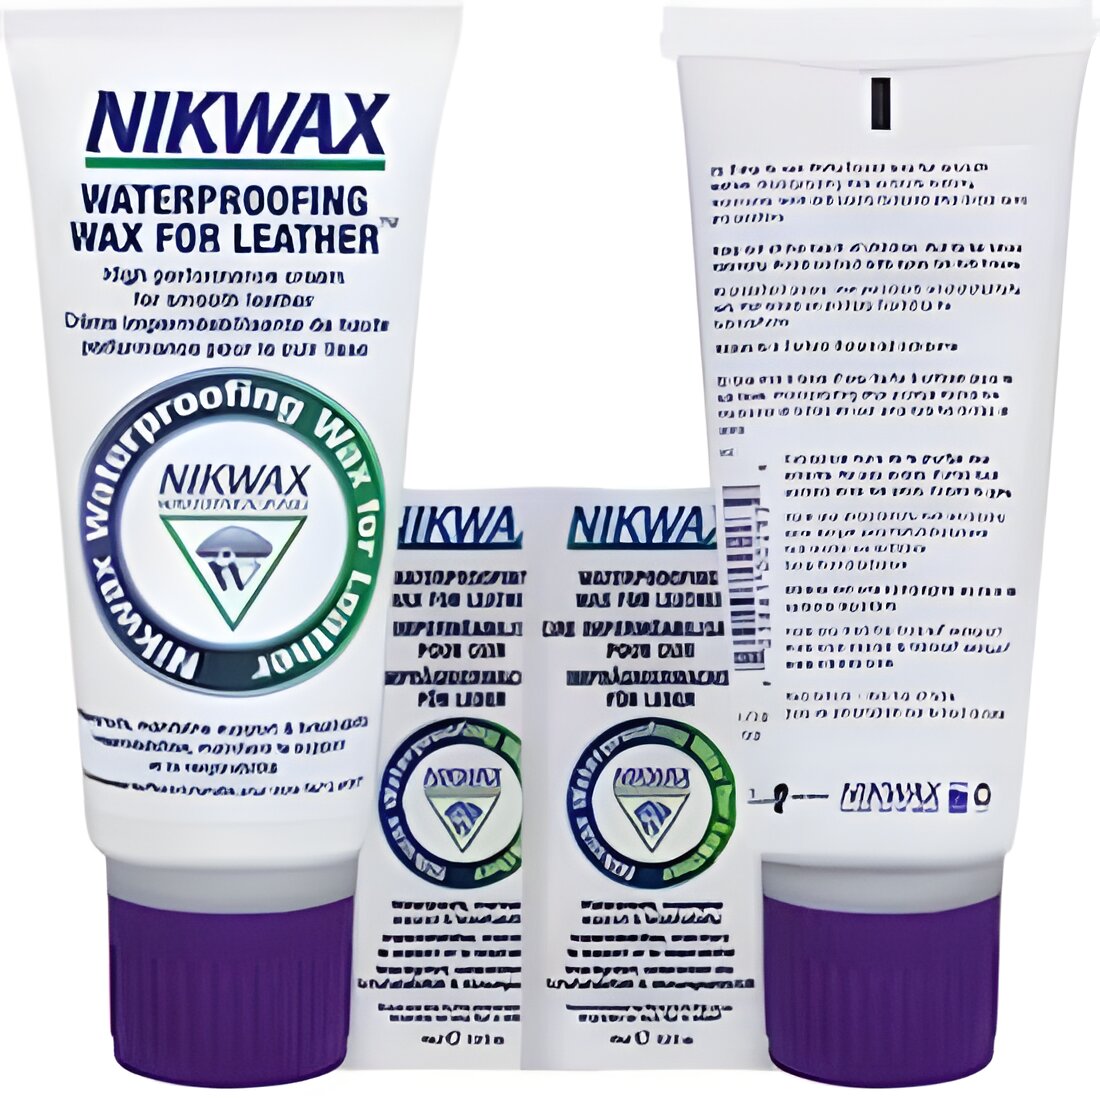 Free Nikwax Waterproofing Wax for Leather